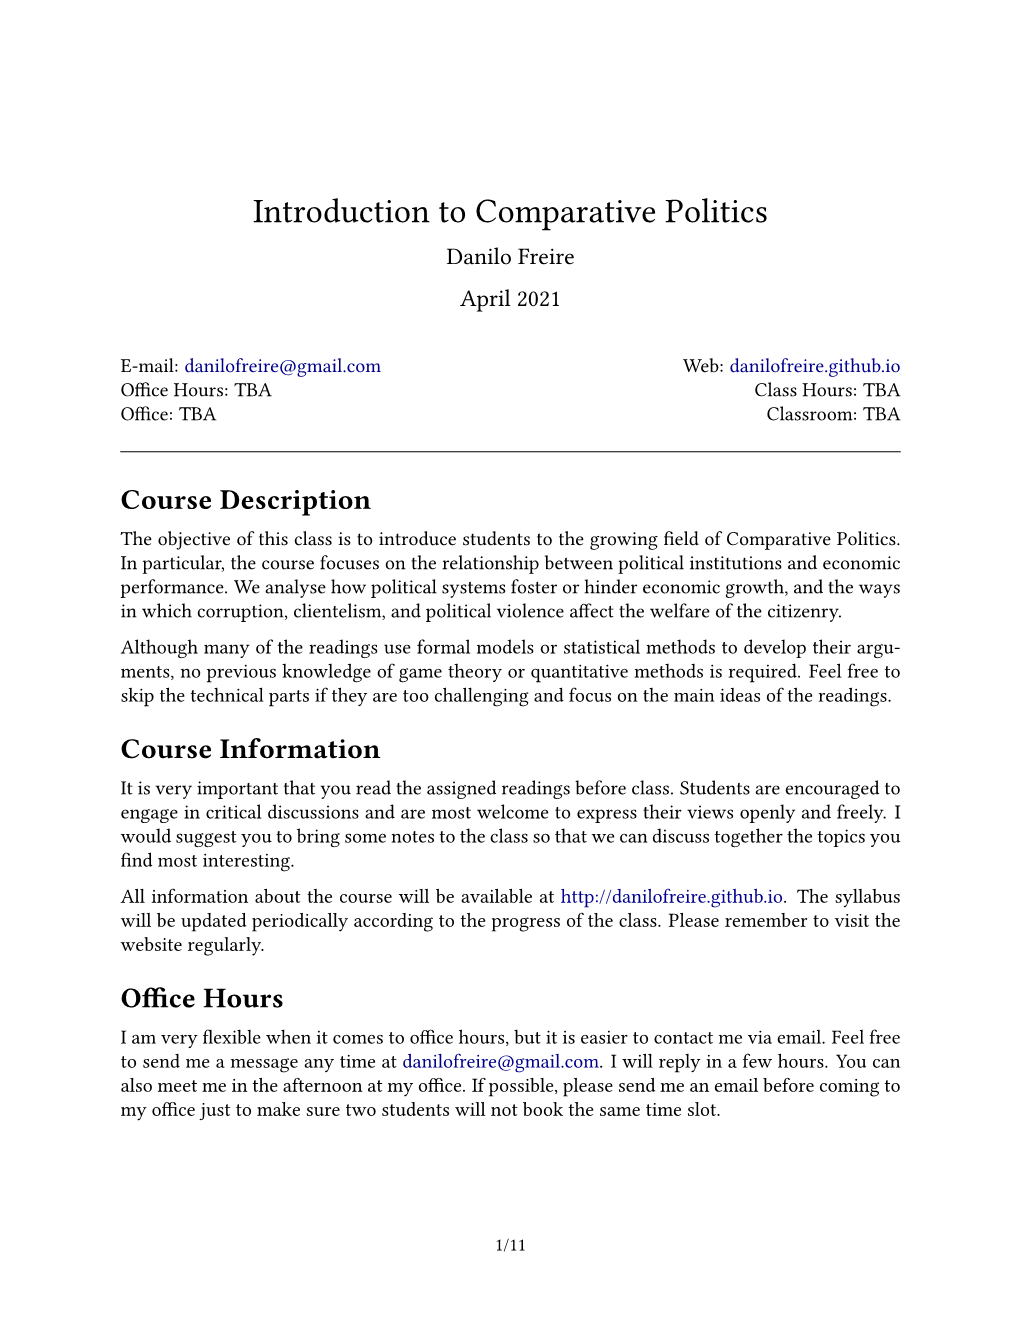 Introduction to Comparative Politics Danilo Freire April 2021